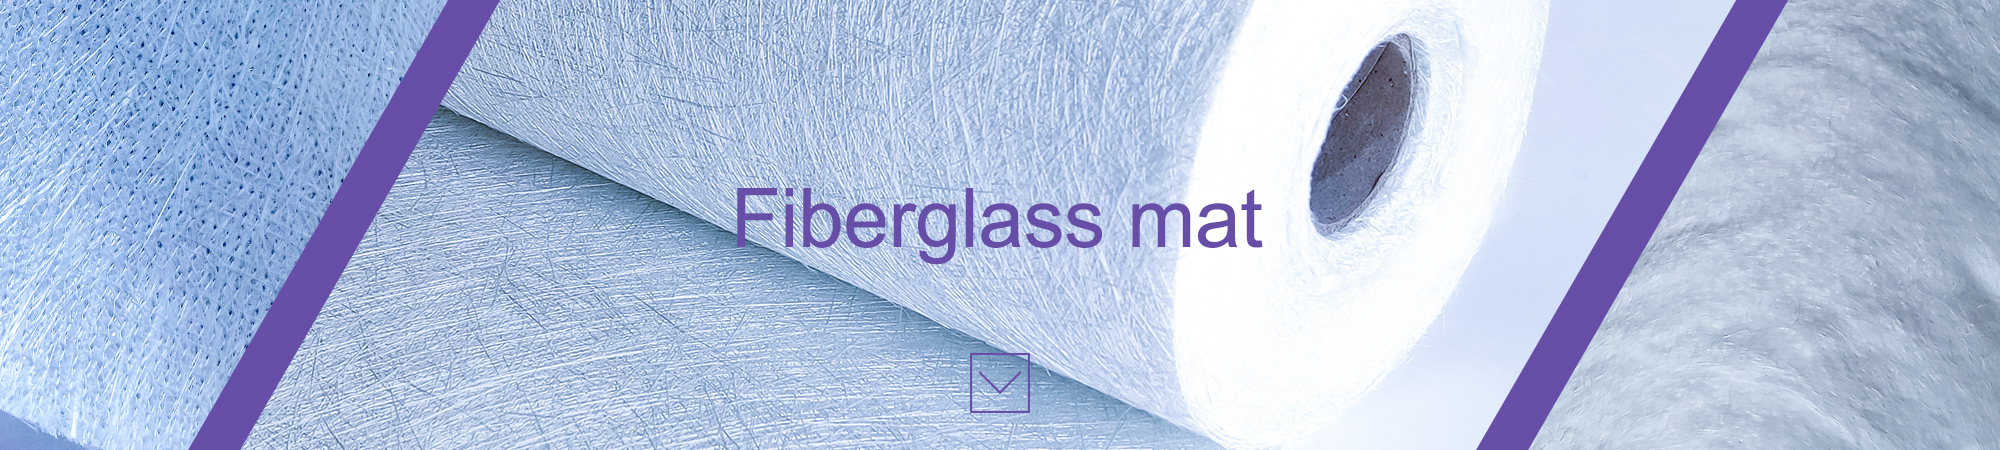 fiberglass mat-HD Fiberglass